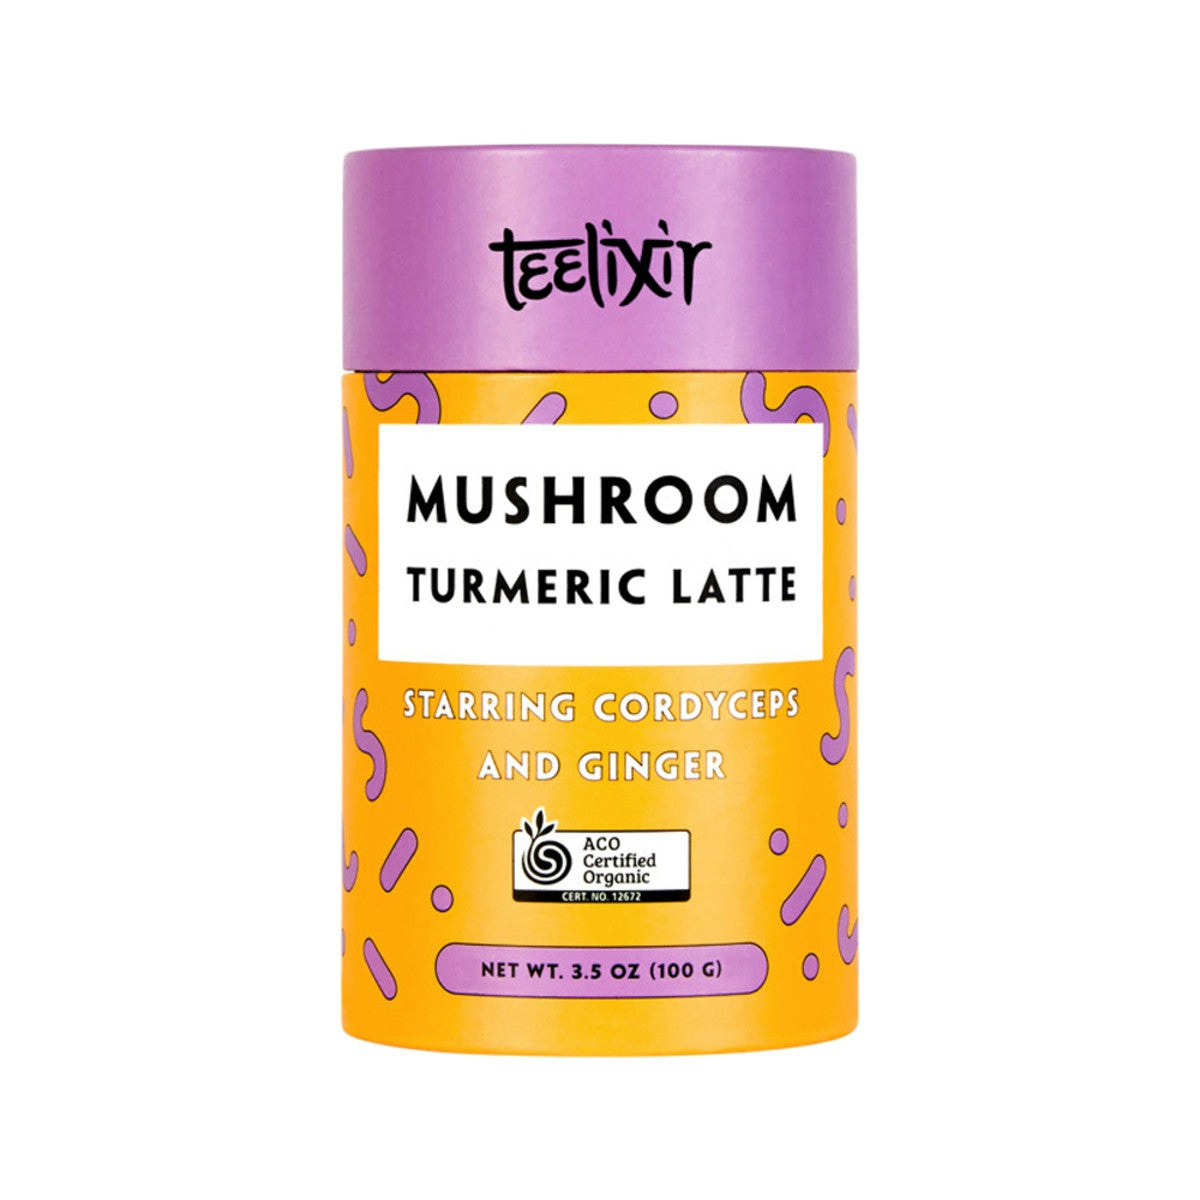 image of Teelixir Organic Mushroom Turmeric Latte (Starring Cordyceps and Ginger) 100g on white background 